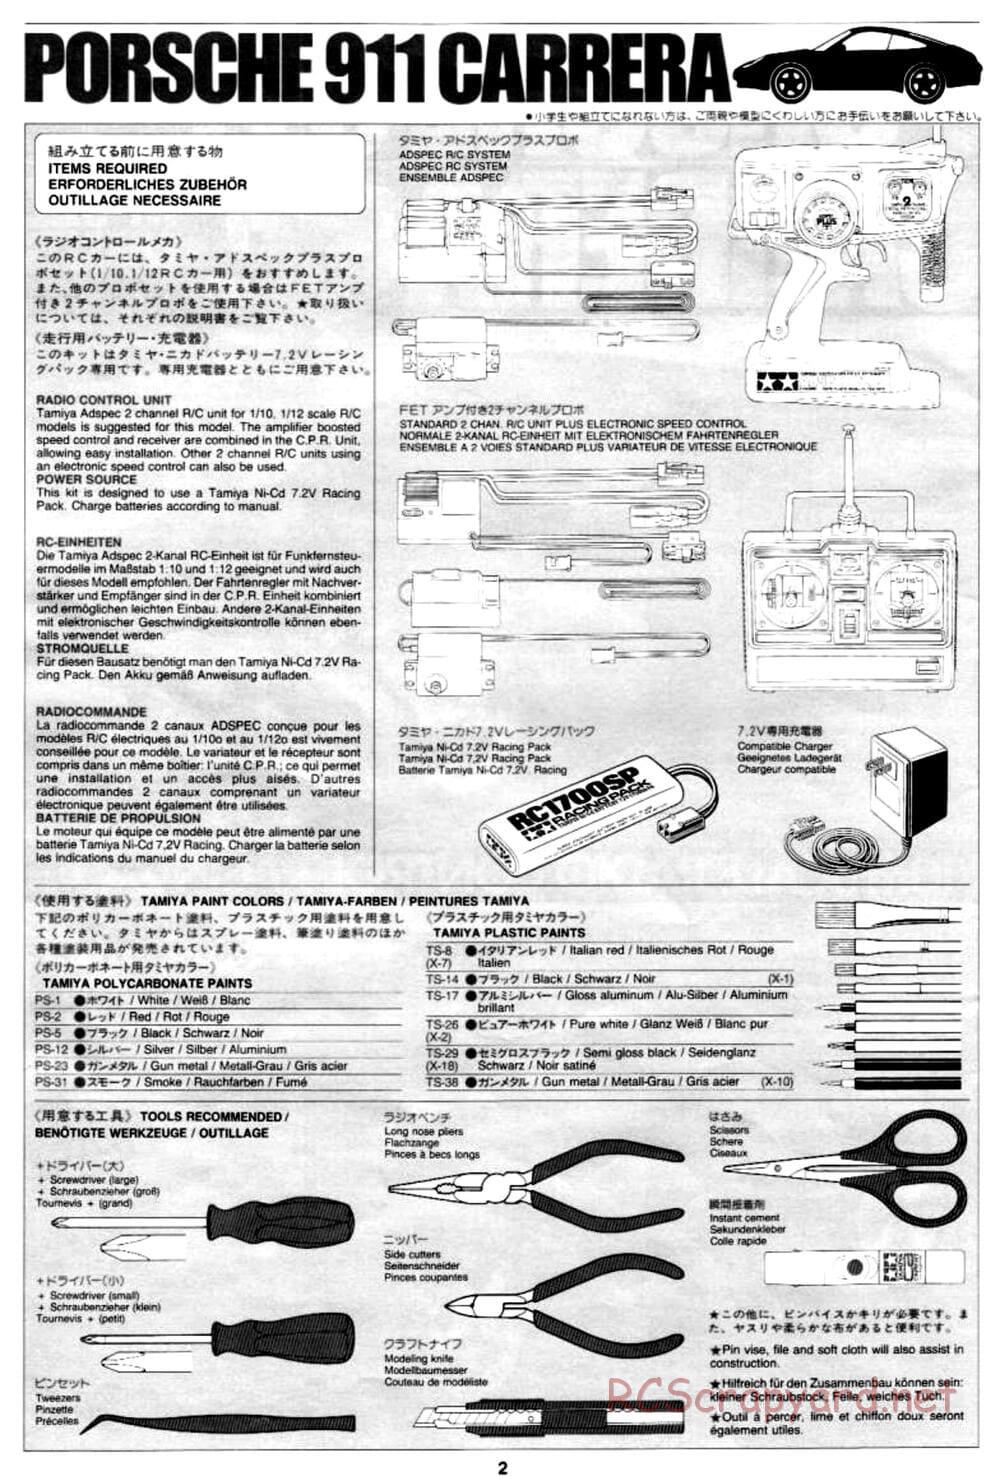 Tamiya - Porsche 911 Carrera - M02L Chassis - Manual - Page 2